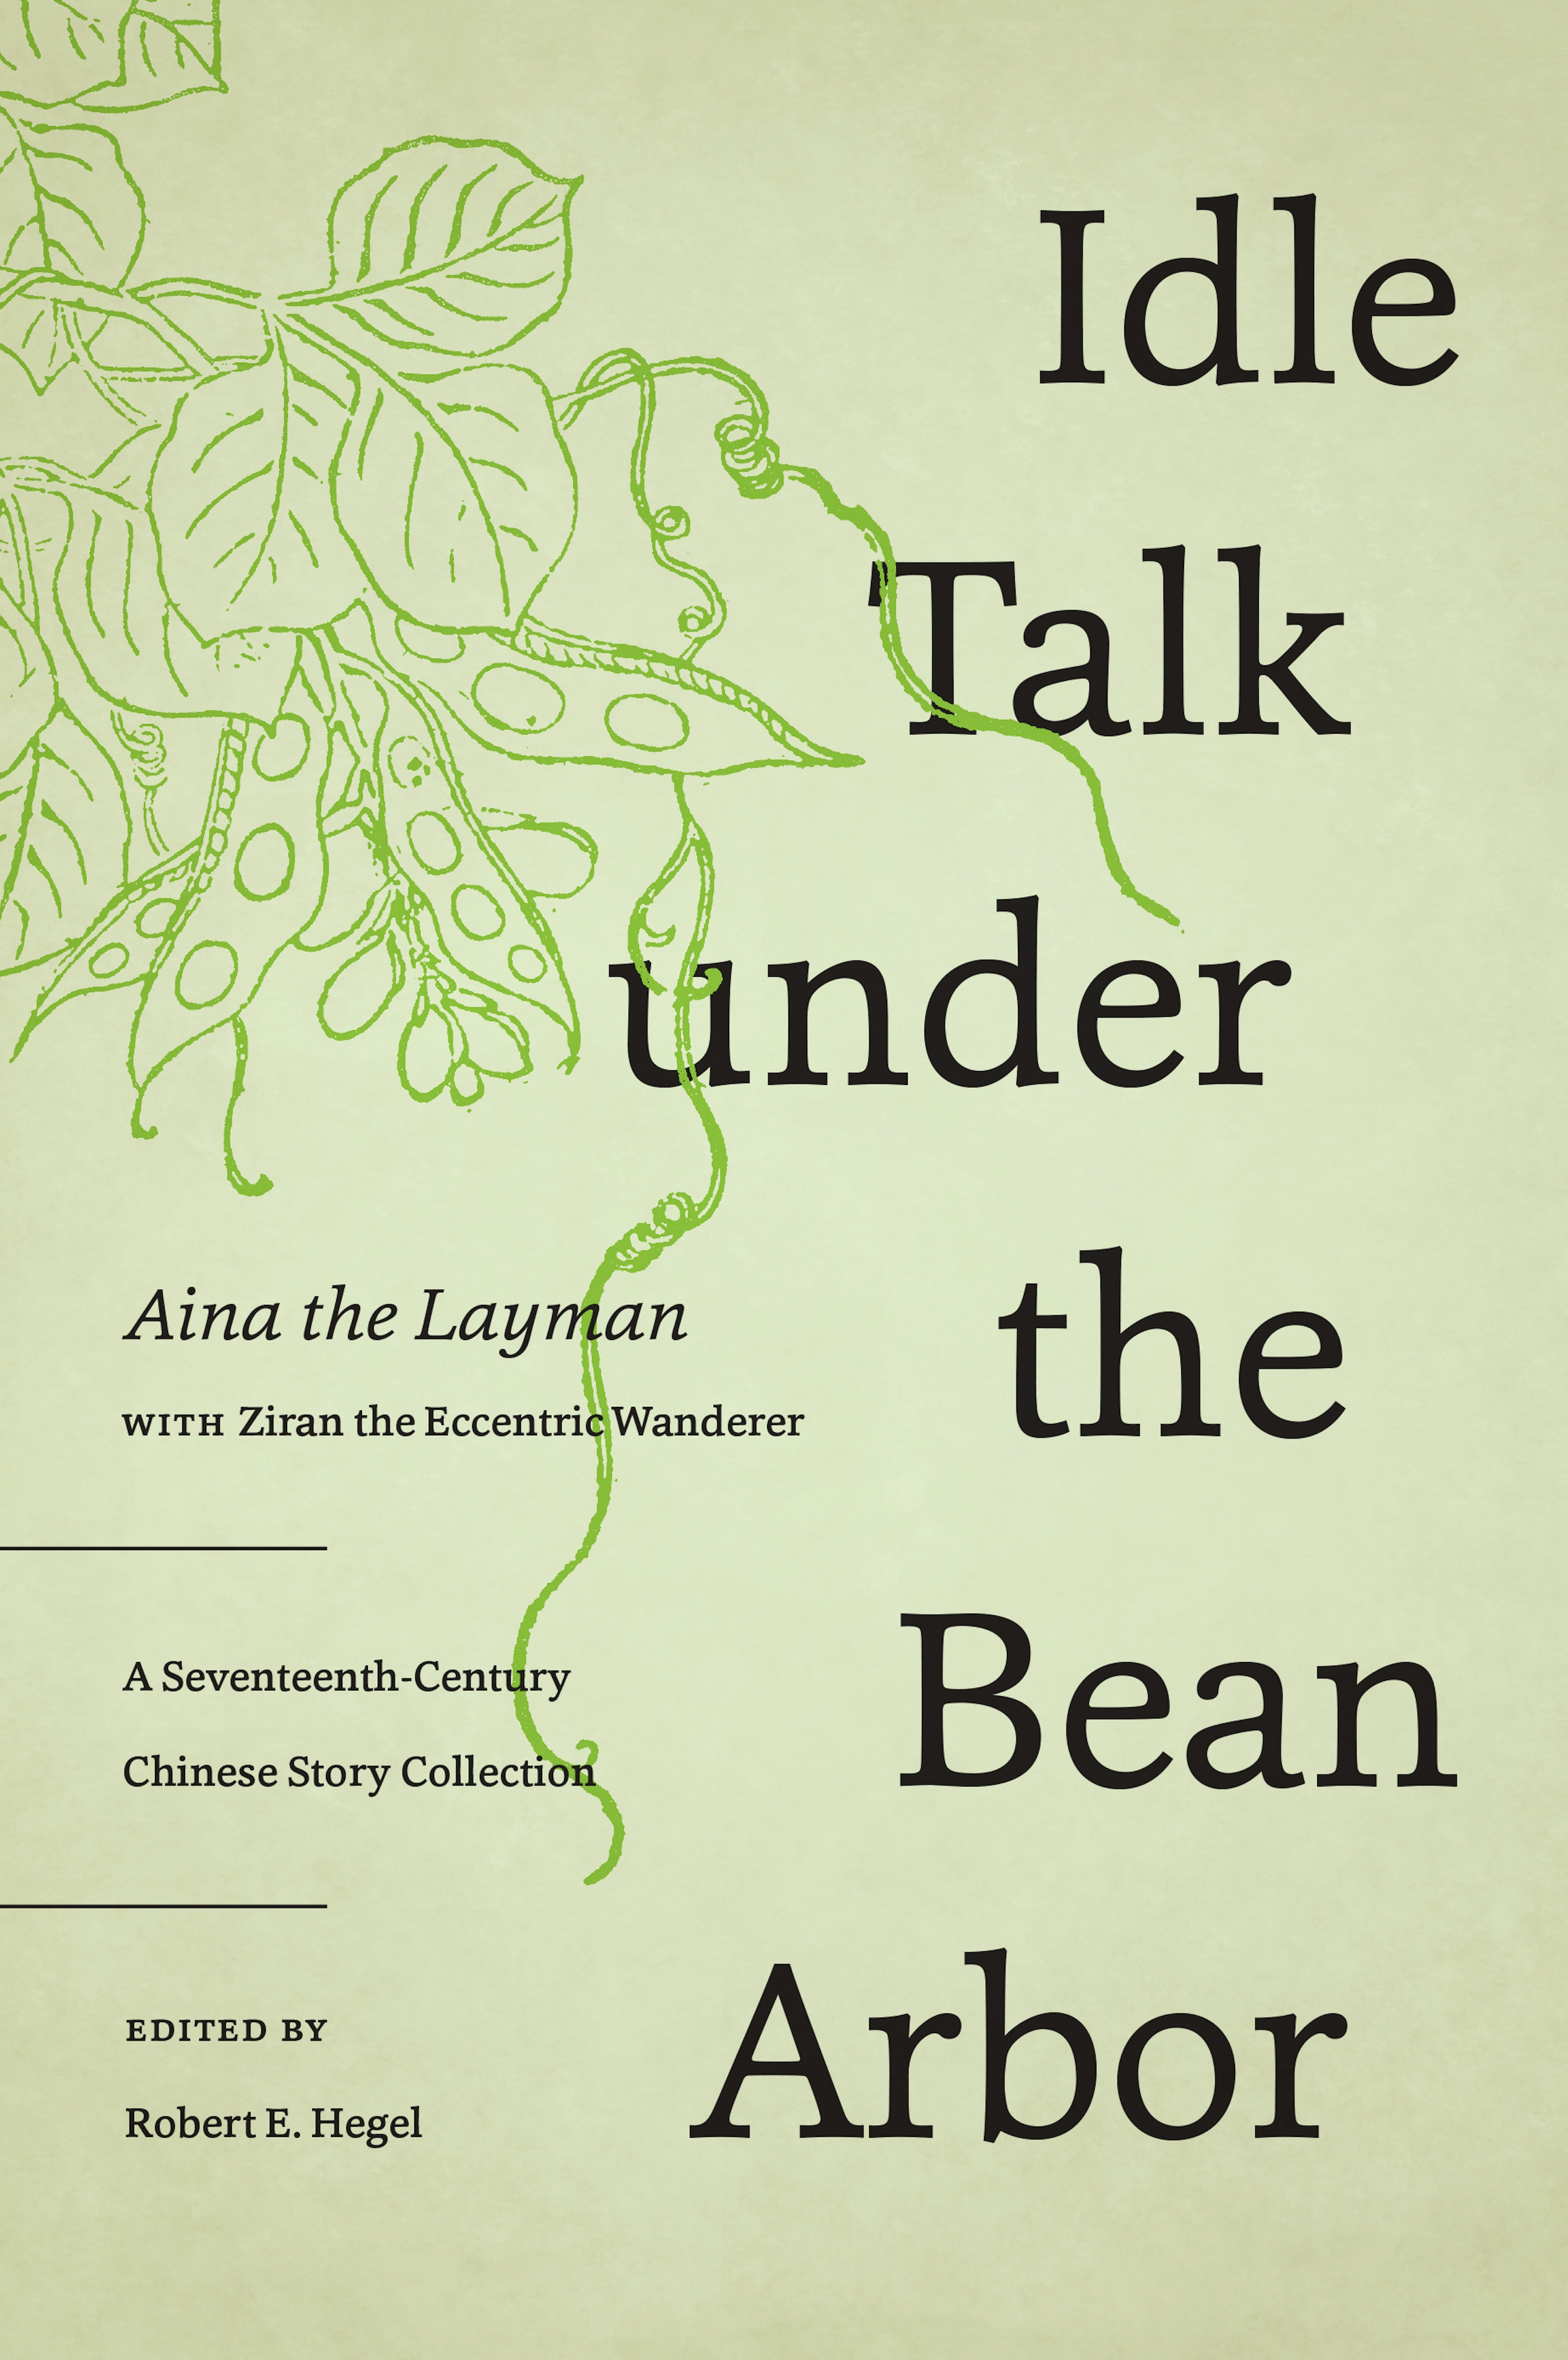 Idle Talk under the Bean Arbor